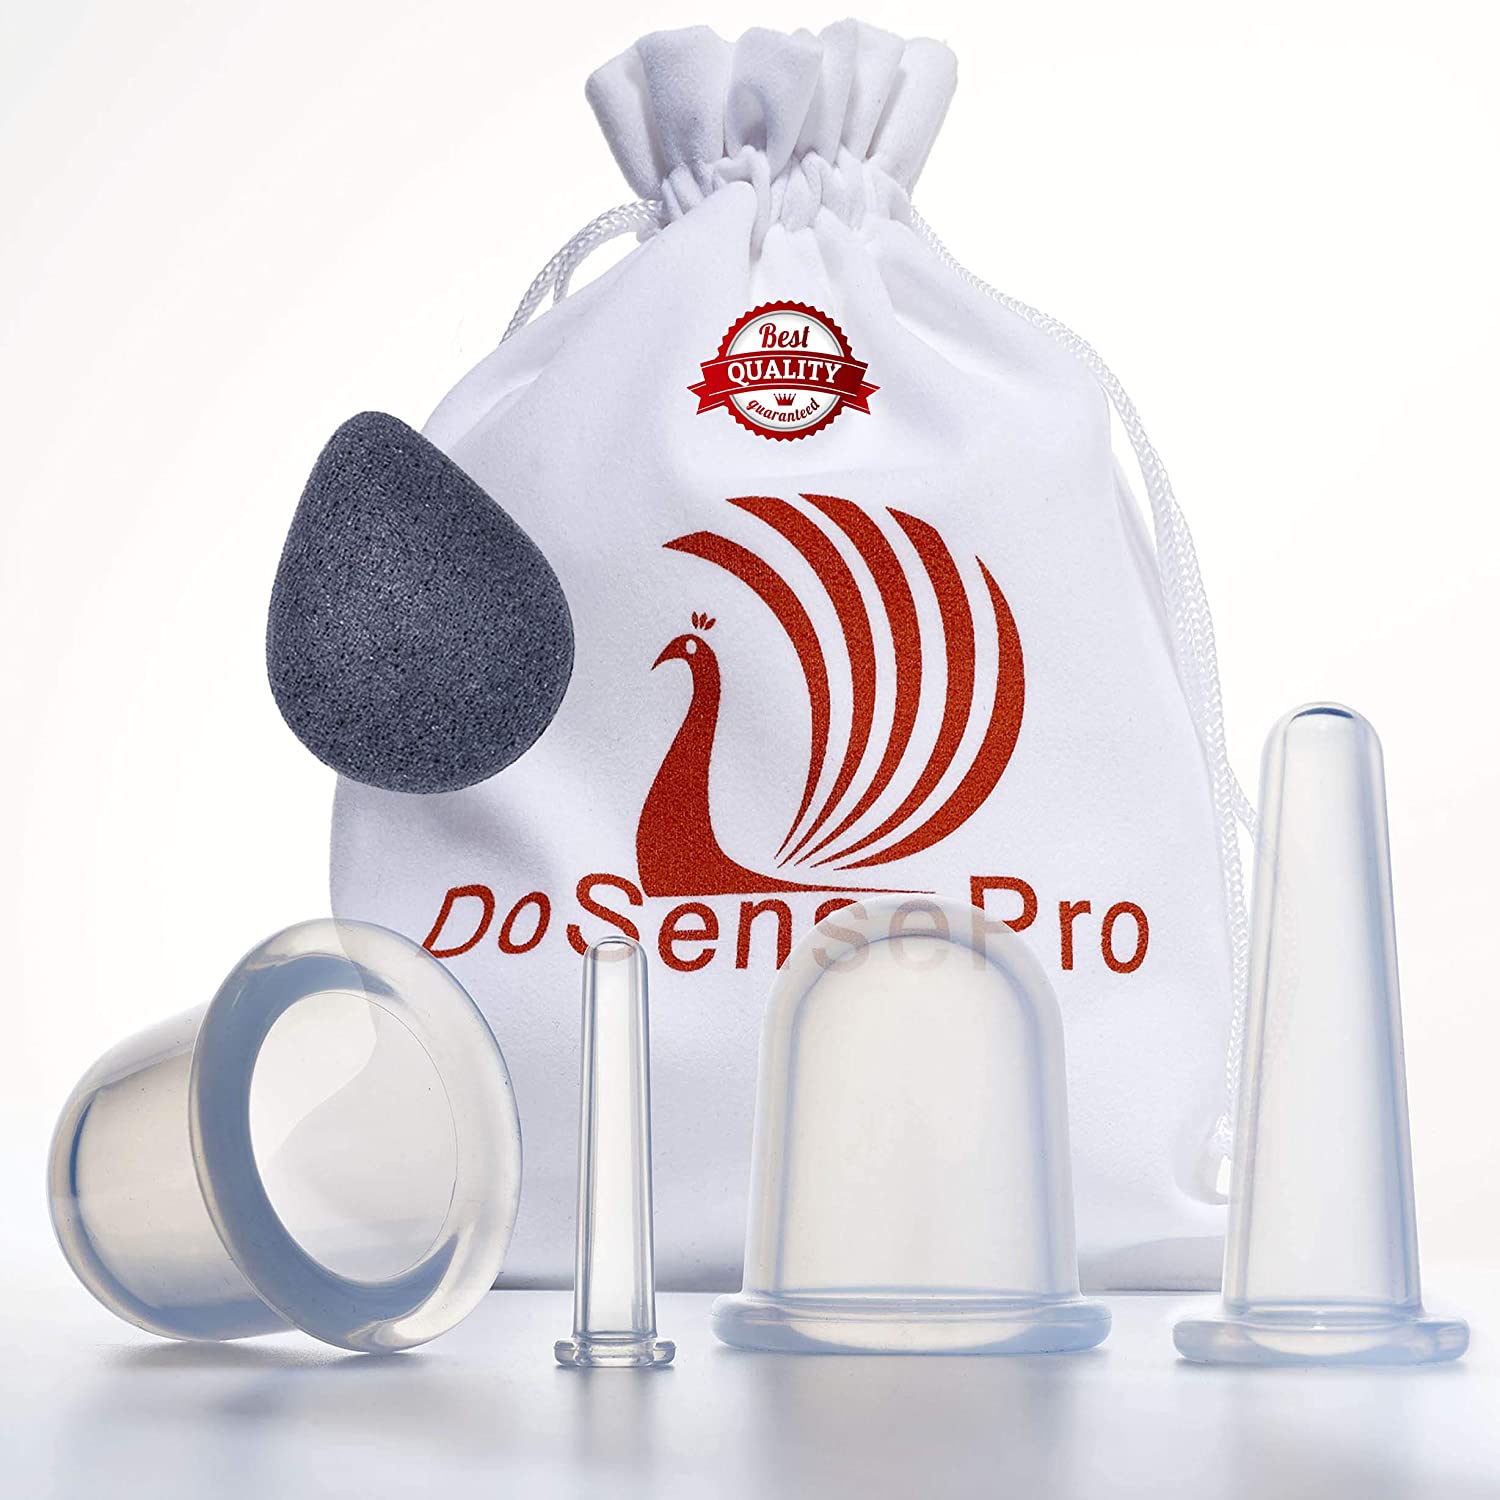 DoSensePro Dry Skin Anti-Cellulite Facial Cupping Set, 5-Piece